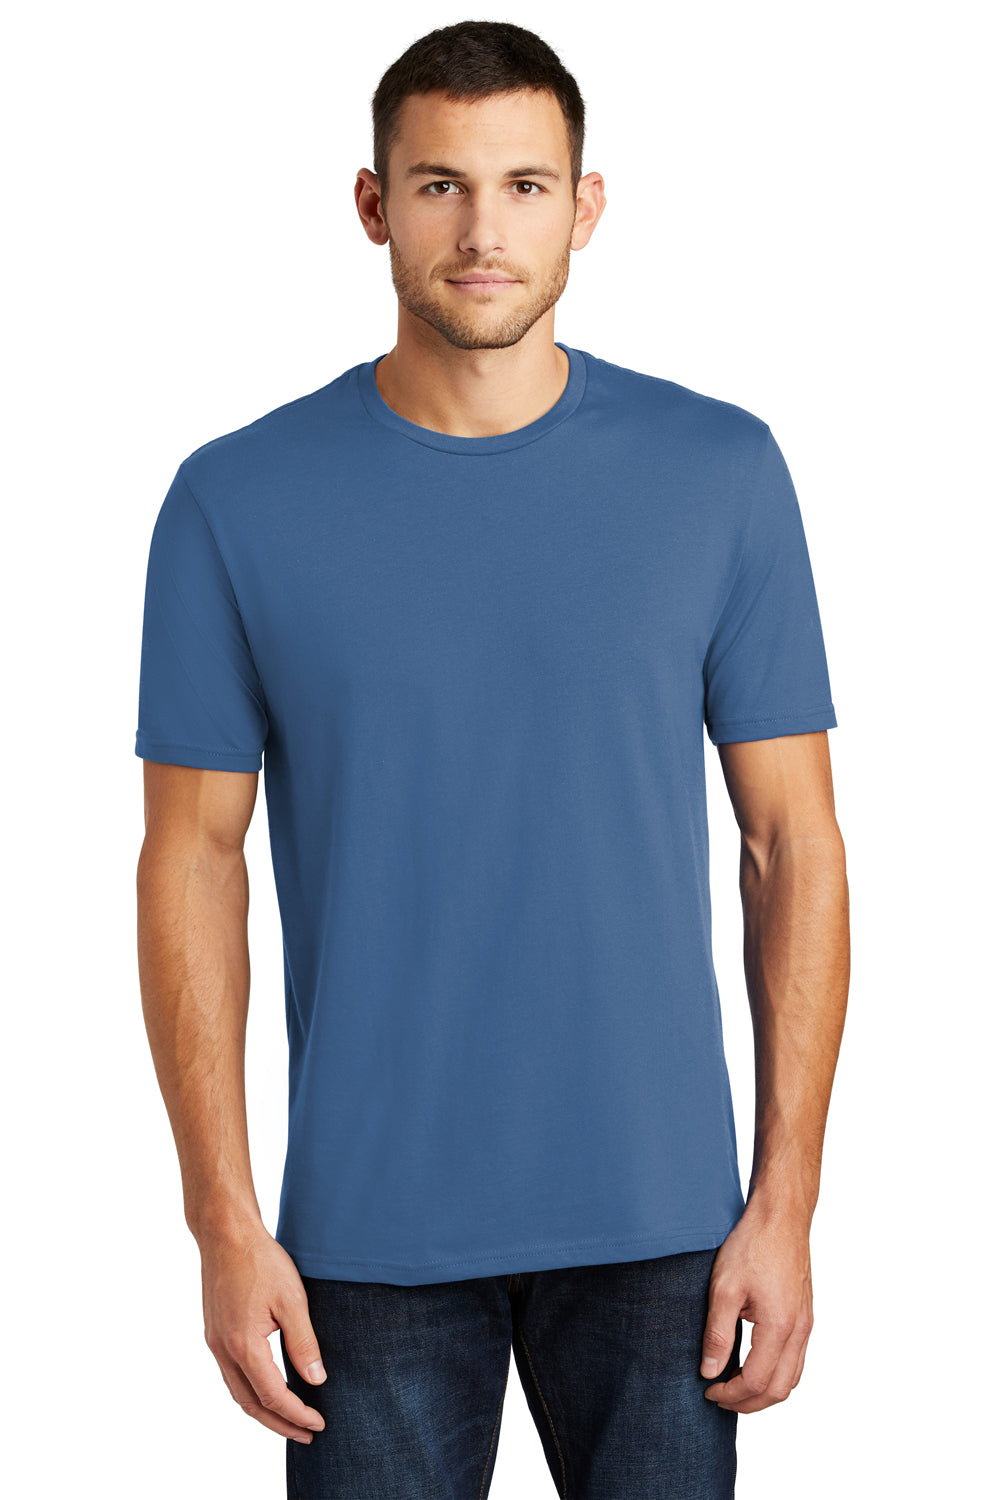 District DT104 Mens Perfect Weight Short Sleeve Crewneck T-Shirt Maritime Blue Front